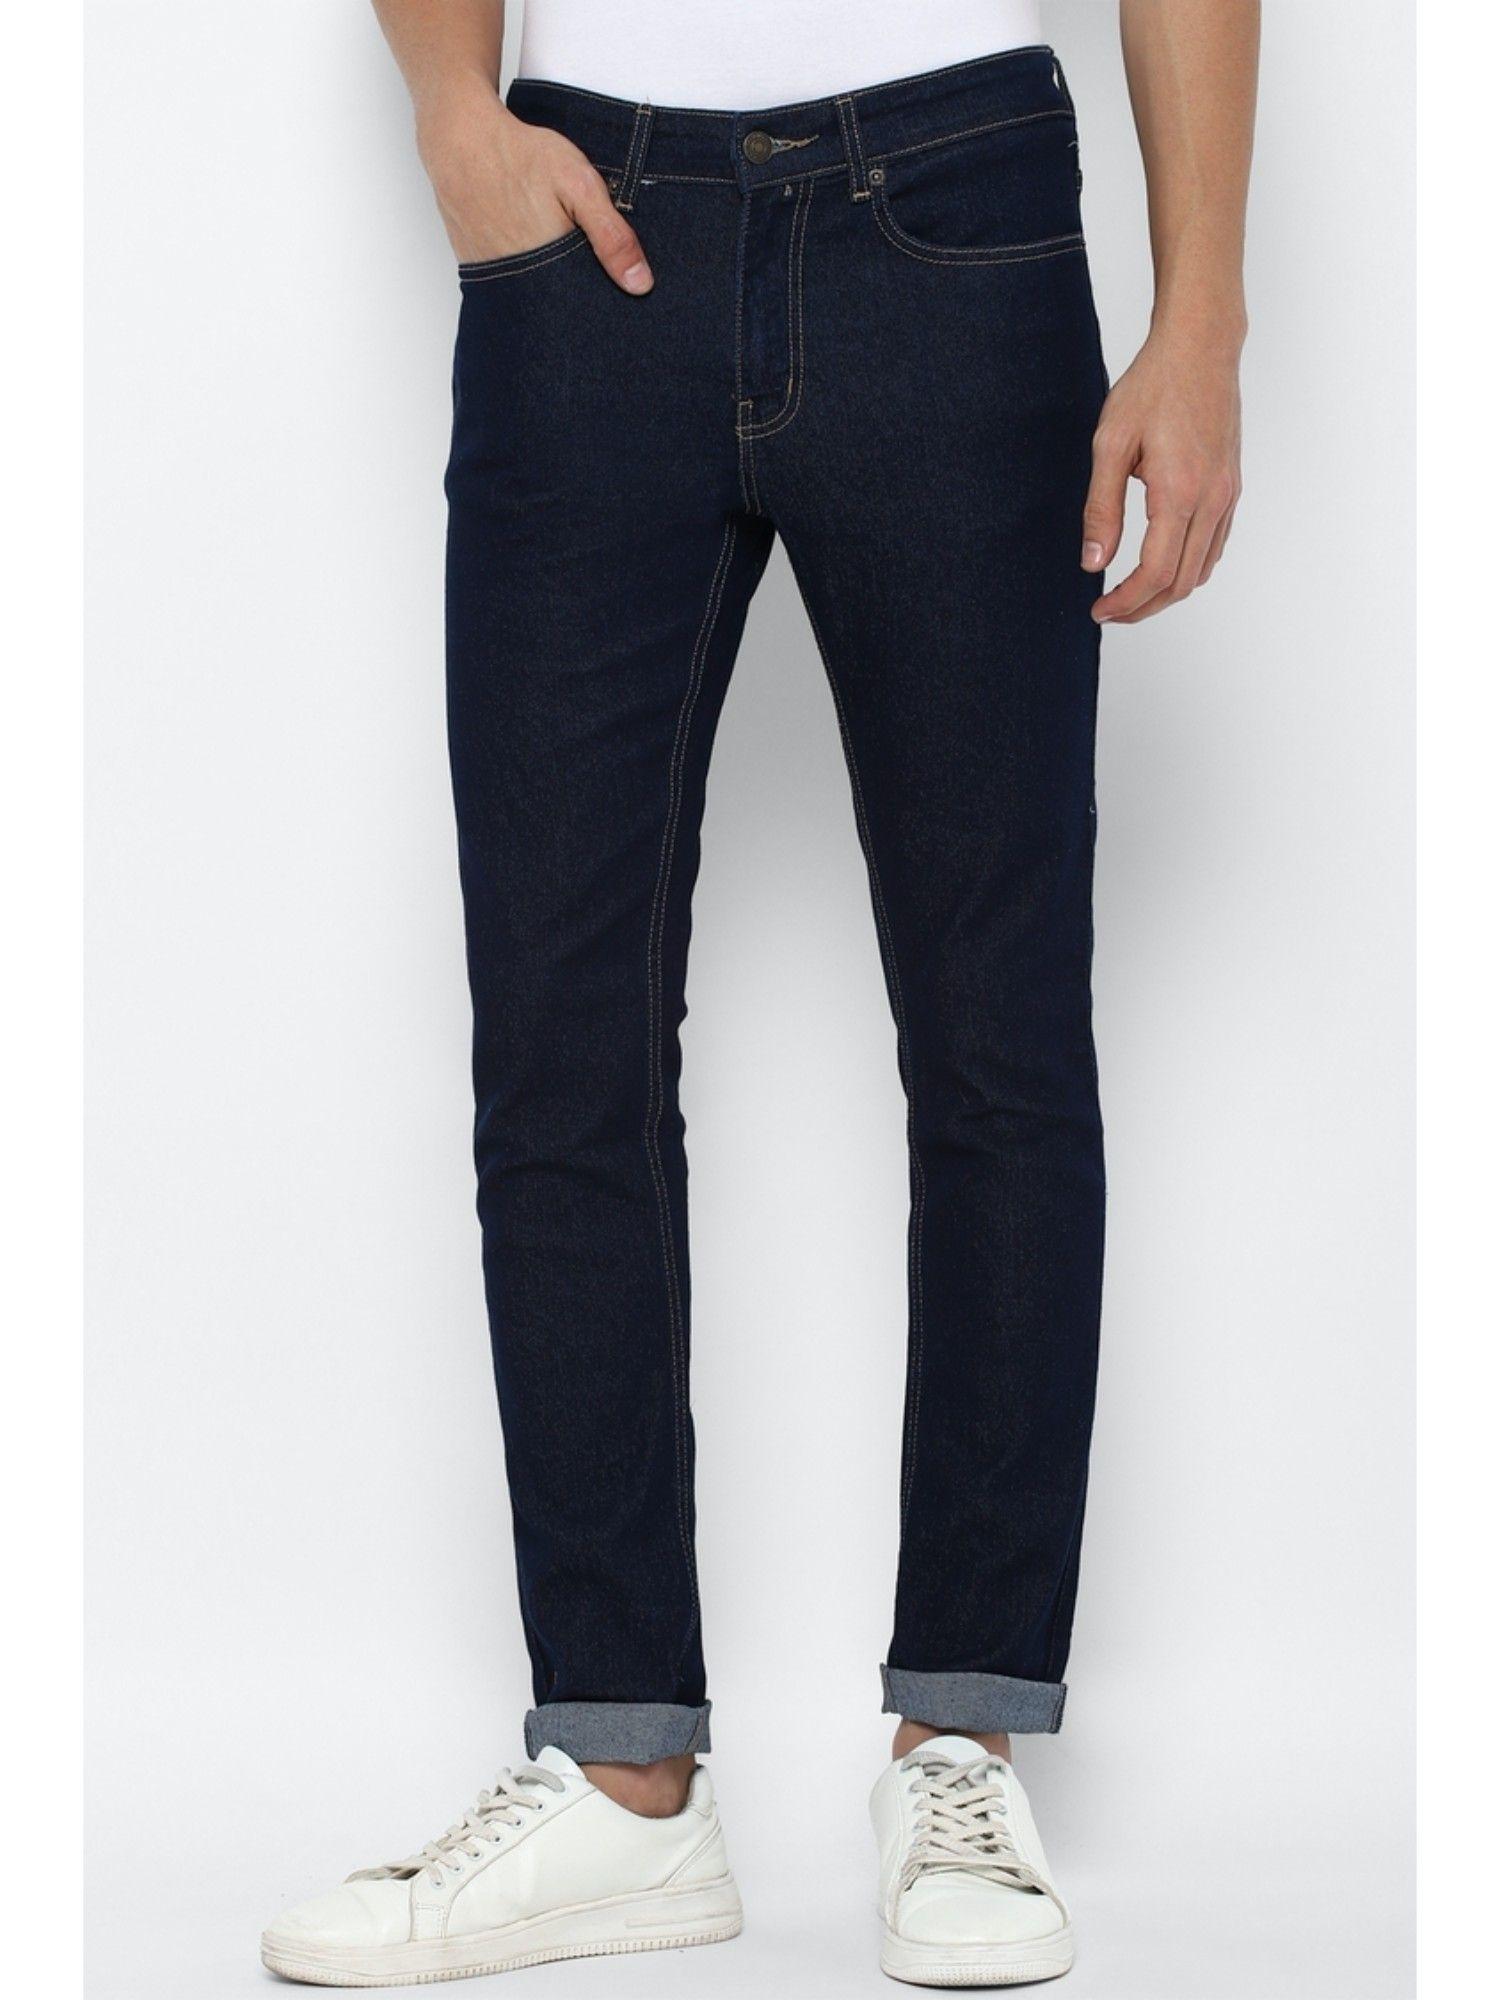 solid-navy-regular-denim-jeans